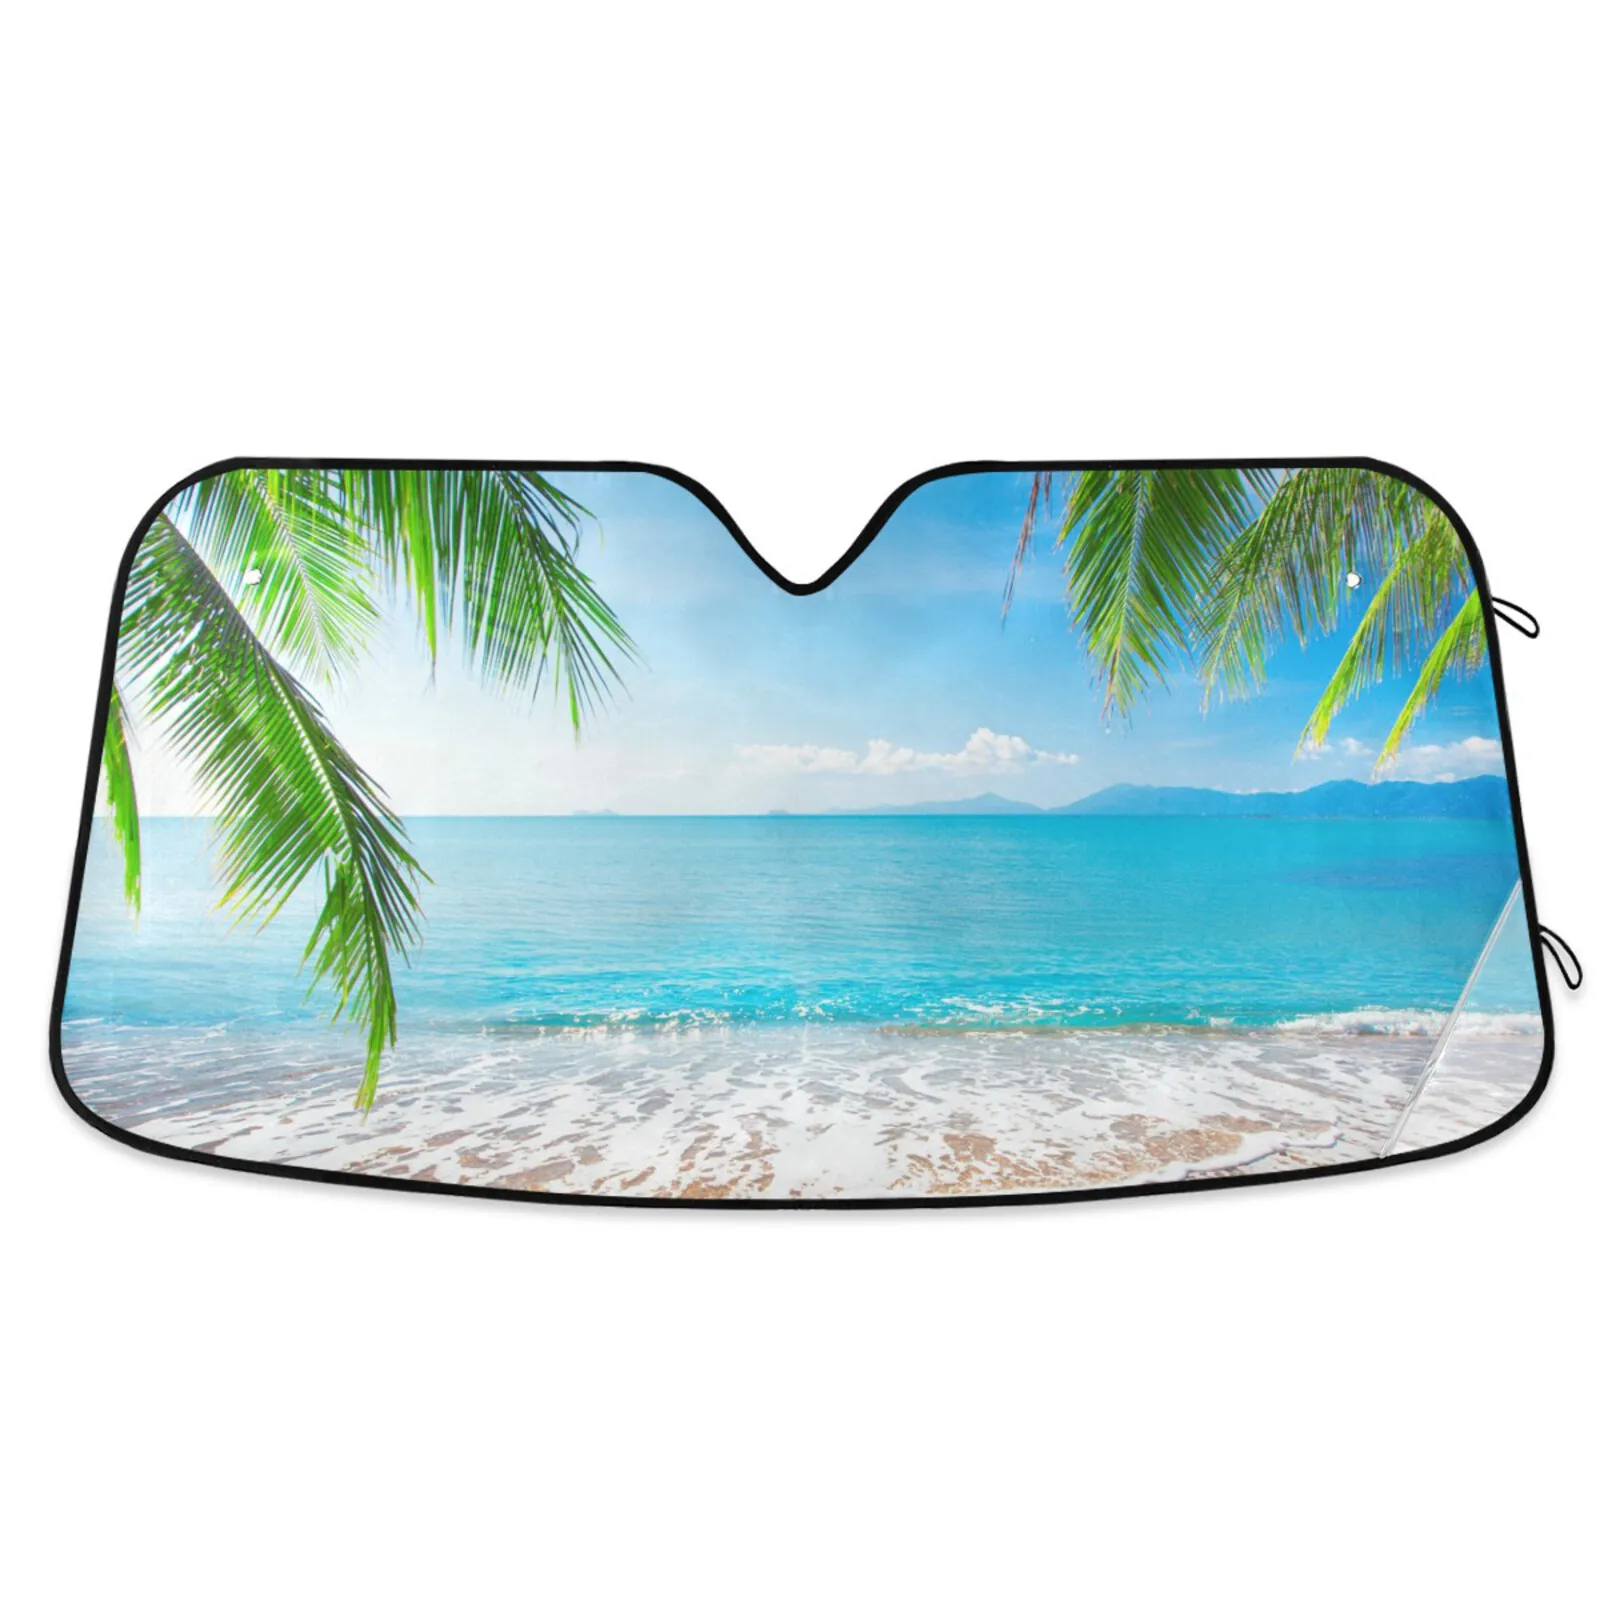 Tropical Beach Palm Tree Car Sun Visor Windshield Sun Shade Blocks UV Ray Auto Front Window Cover Foldable Keep Vehicle Cool